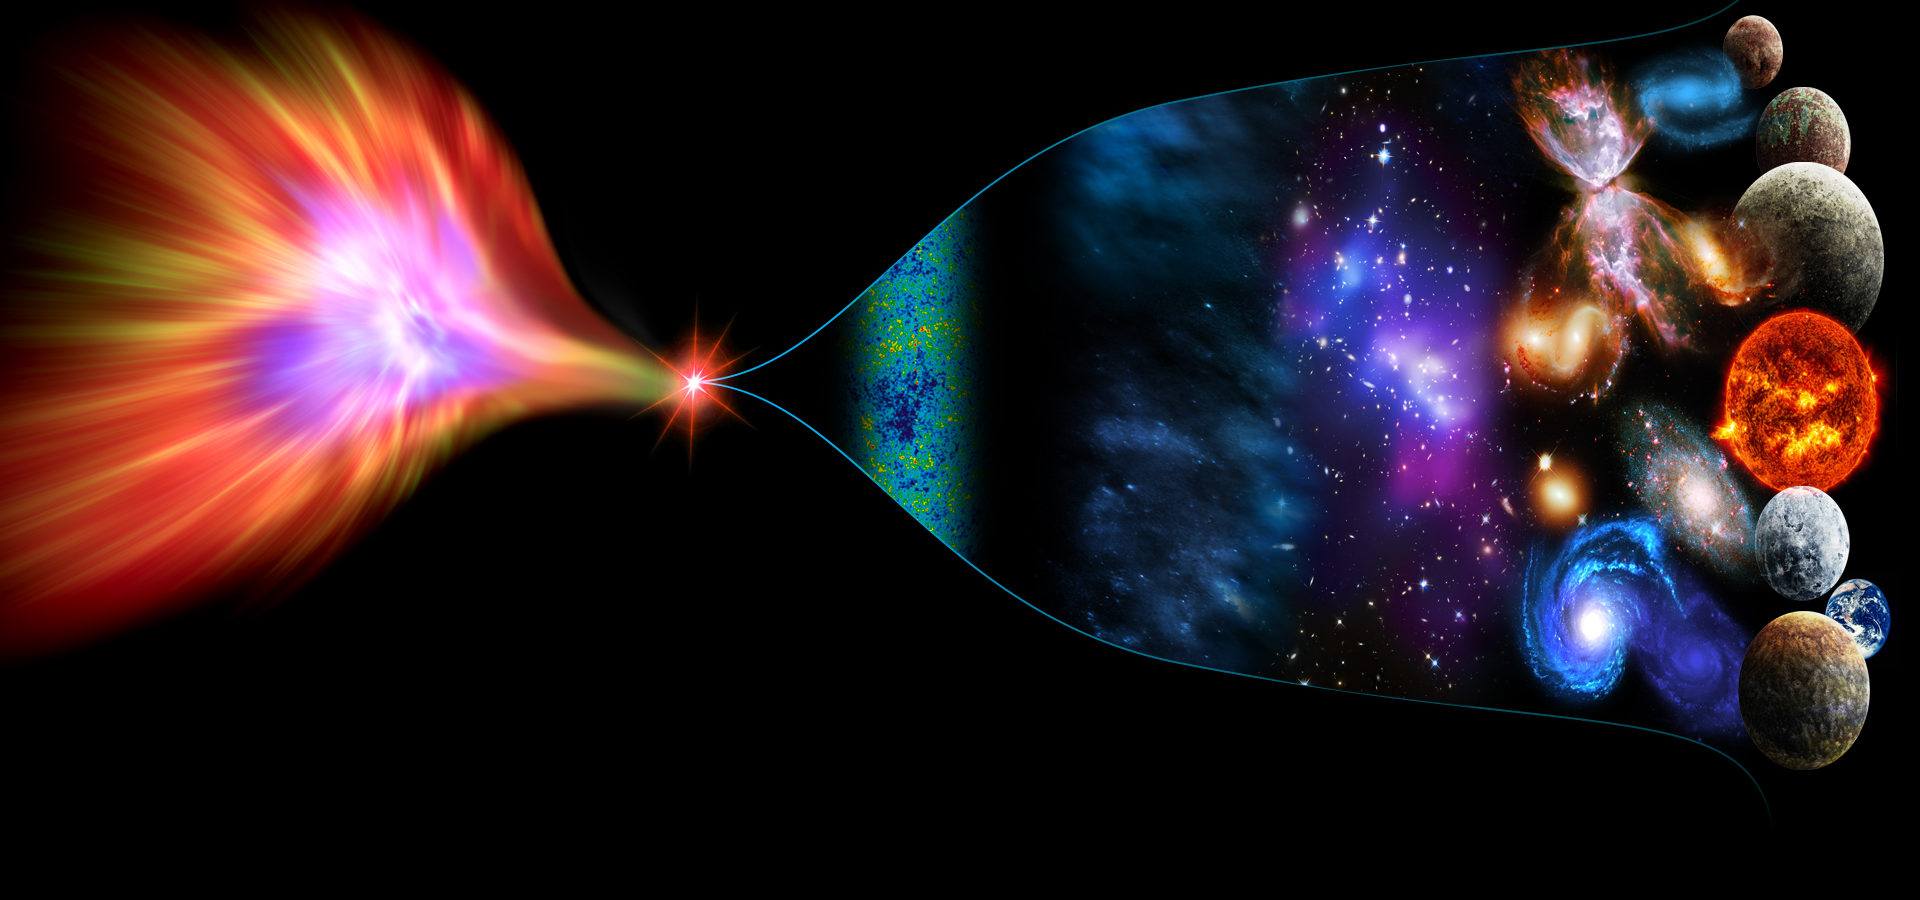 Comparing cosmologies: theorists debate 'big bounce